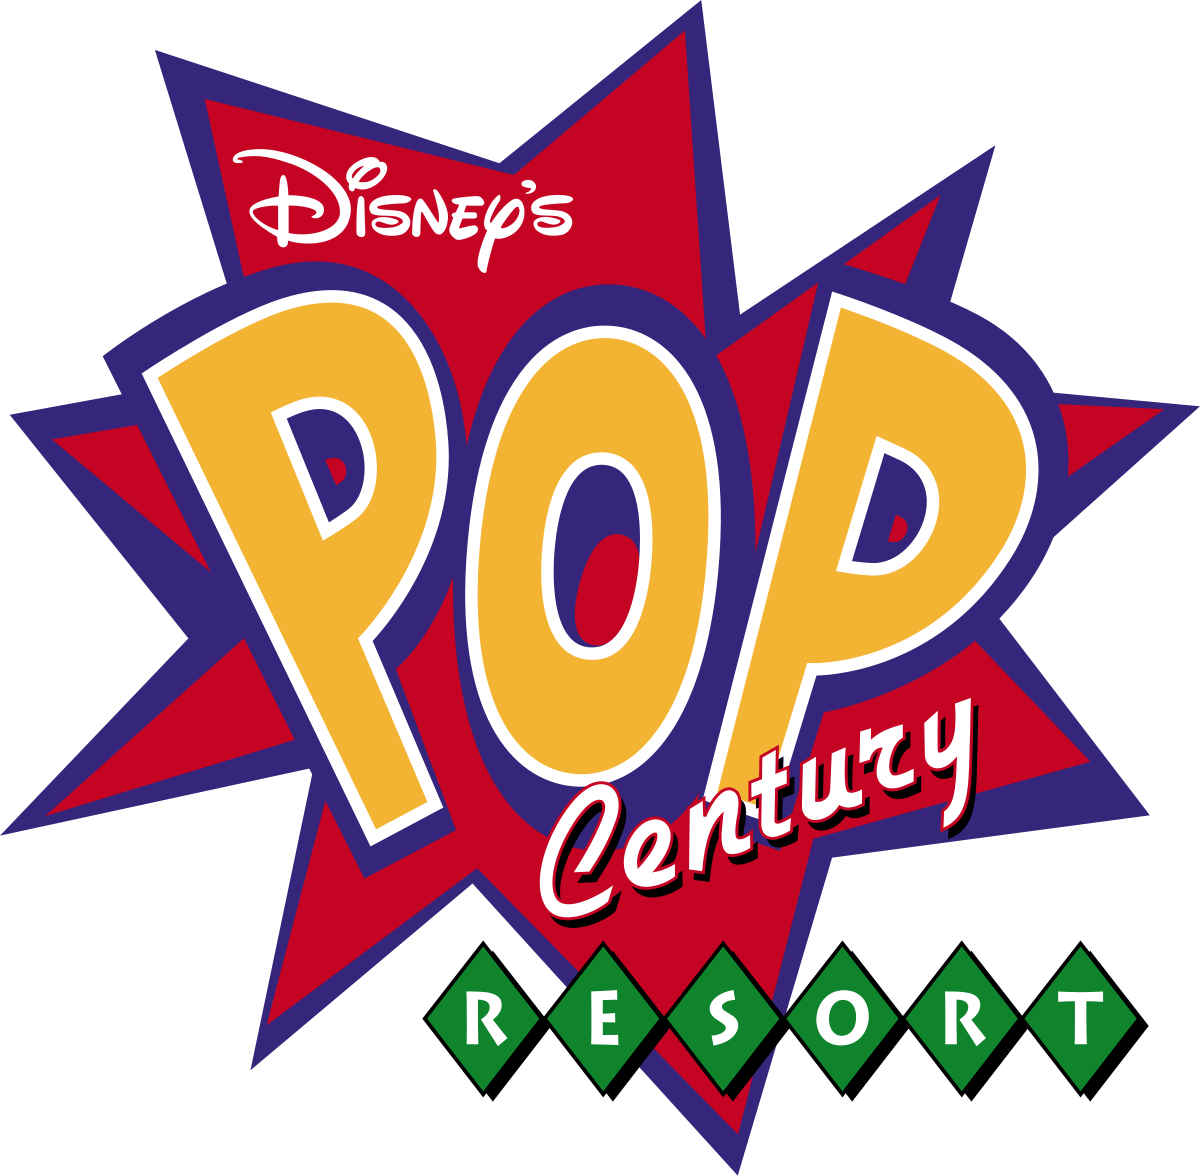 Walt Disney World Logo - Disney's Pop Century Resort